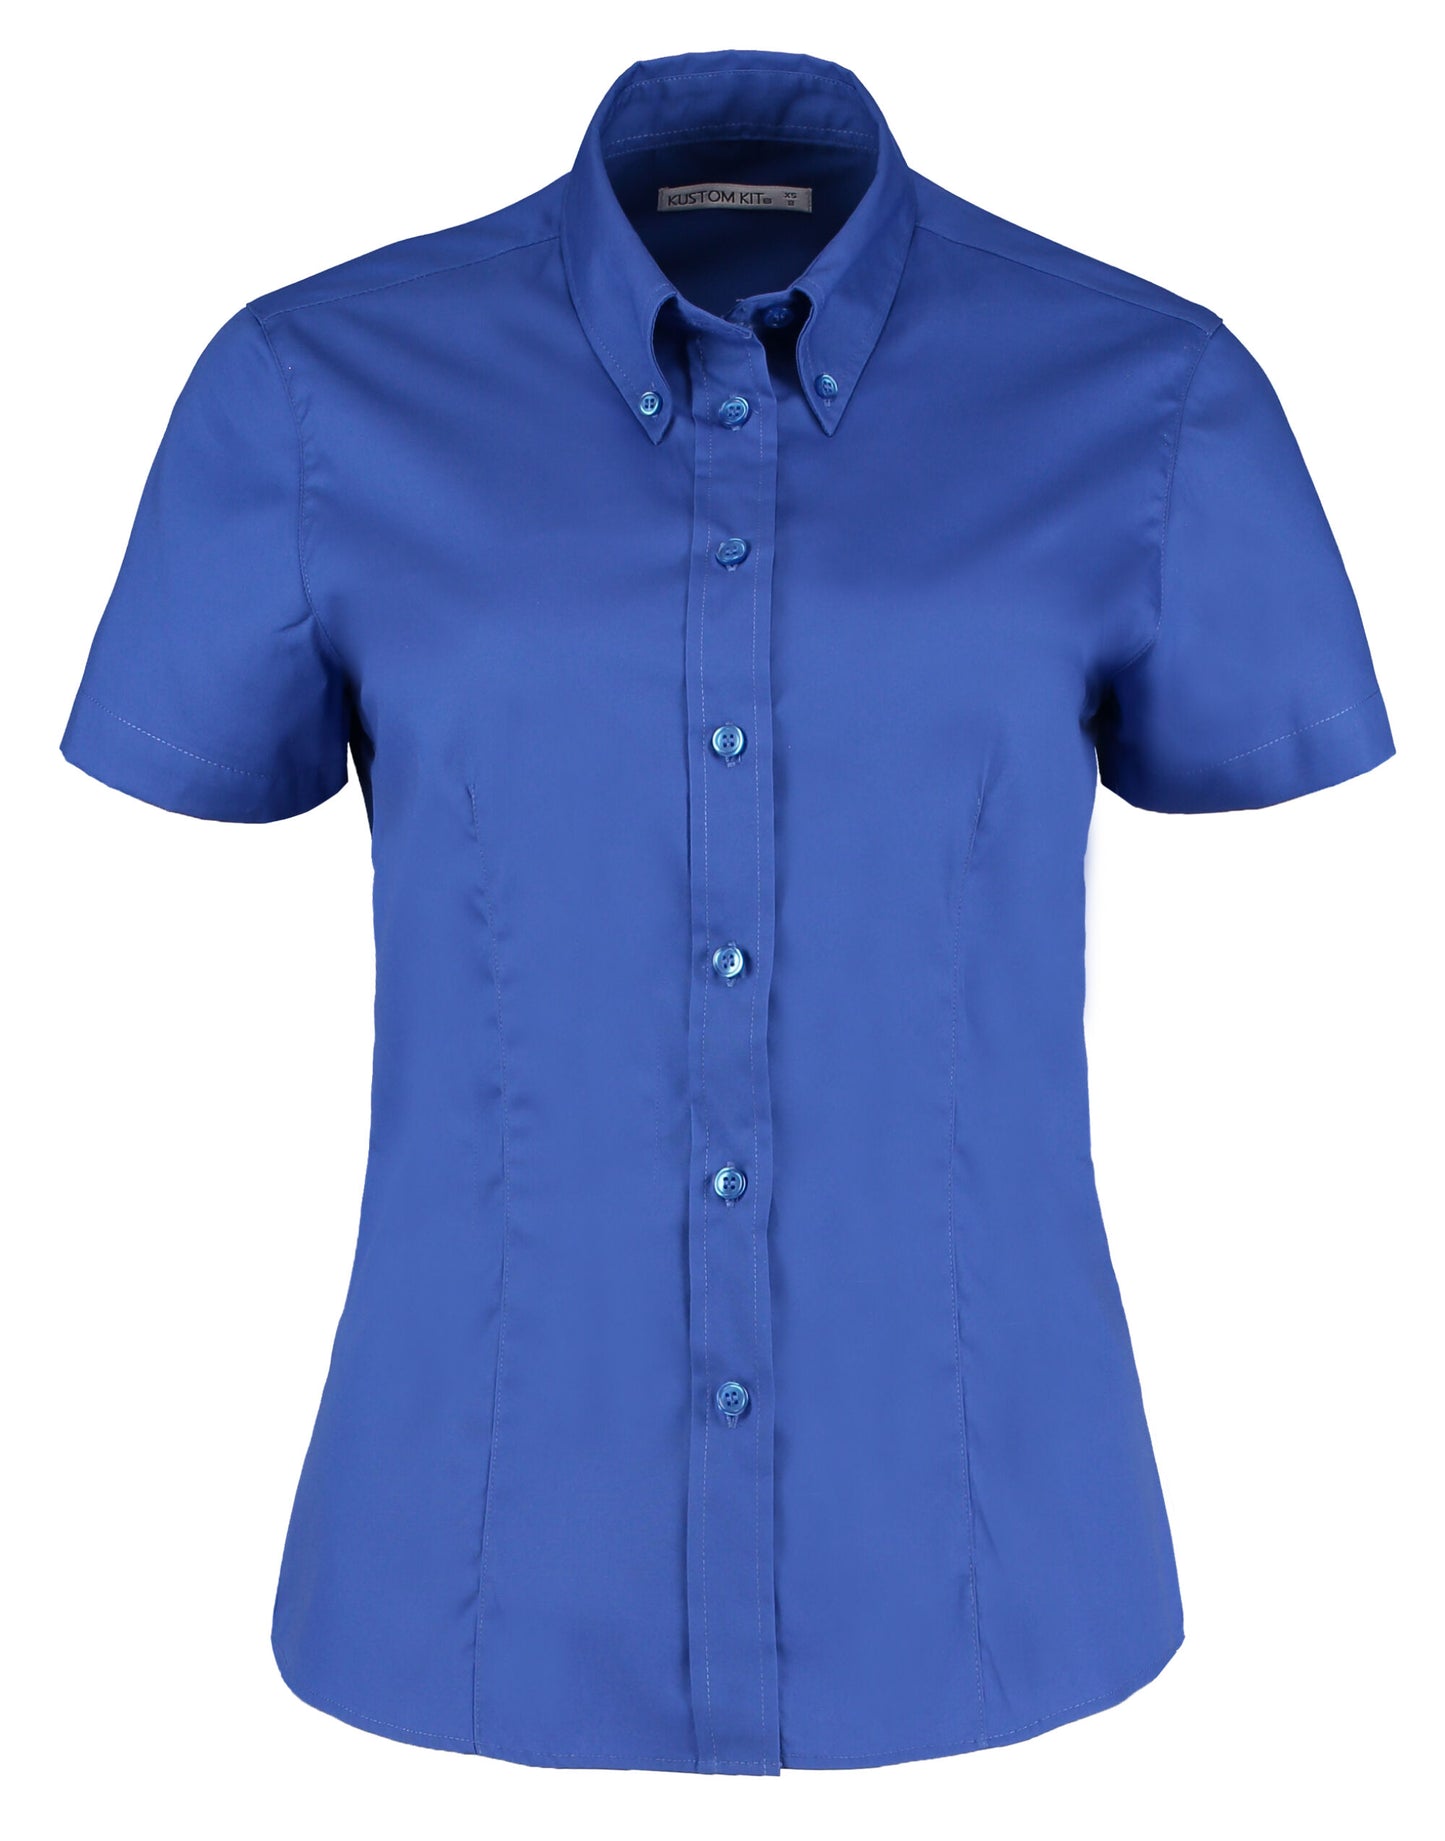 KK701 Kustom Kit Womens Oxford Shirt Short Sleeve